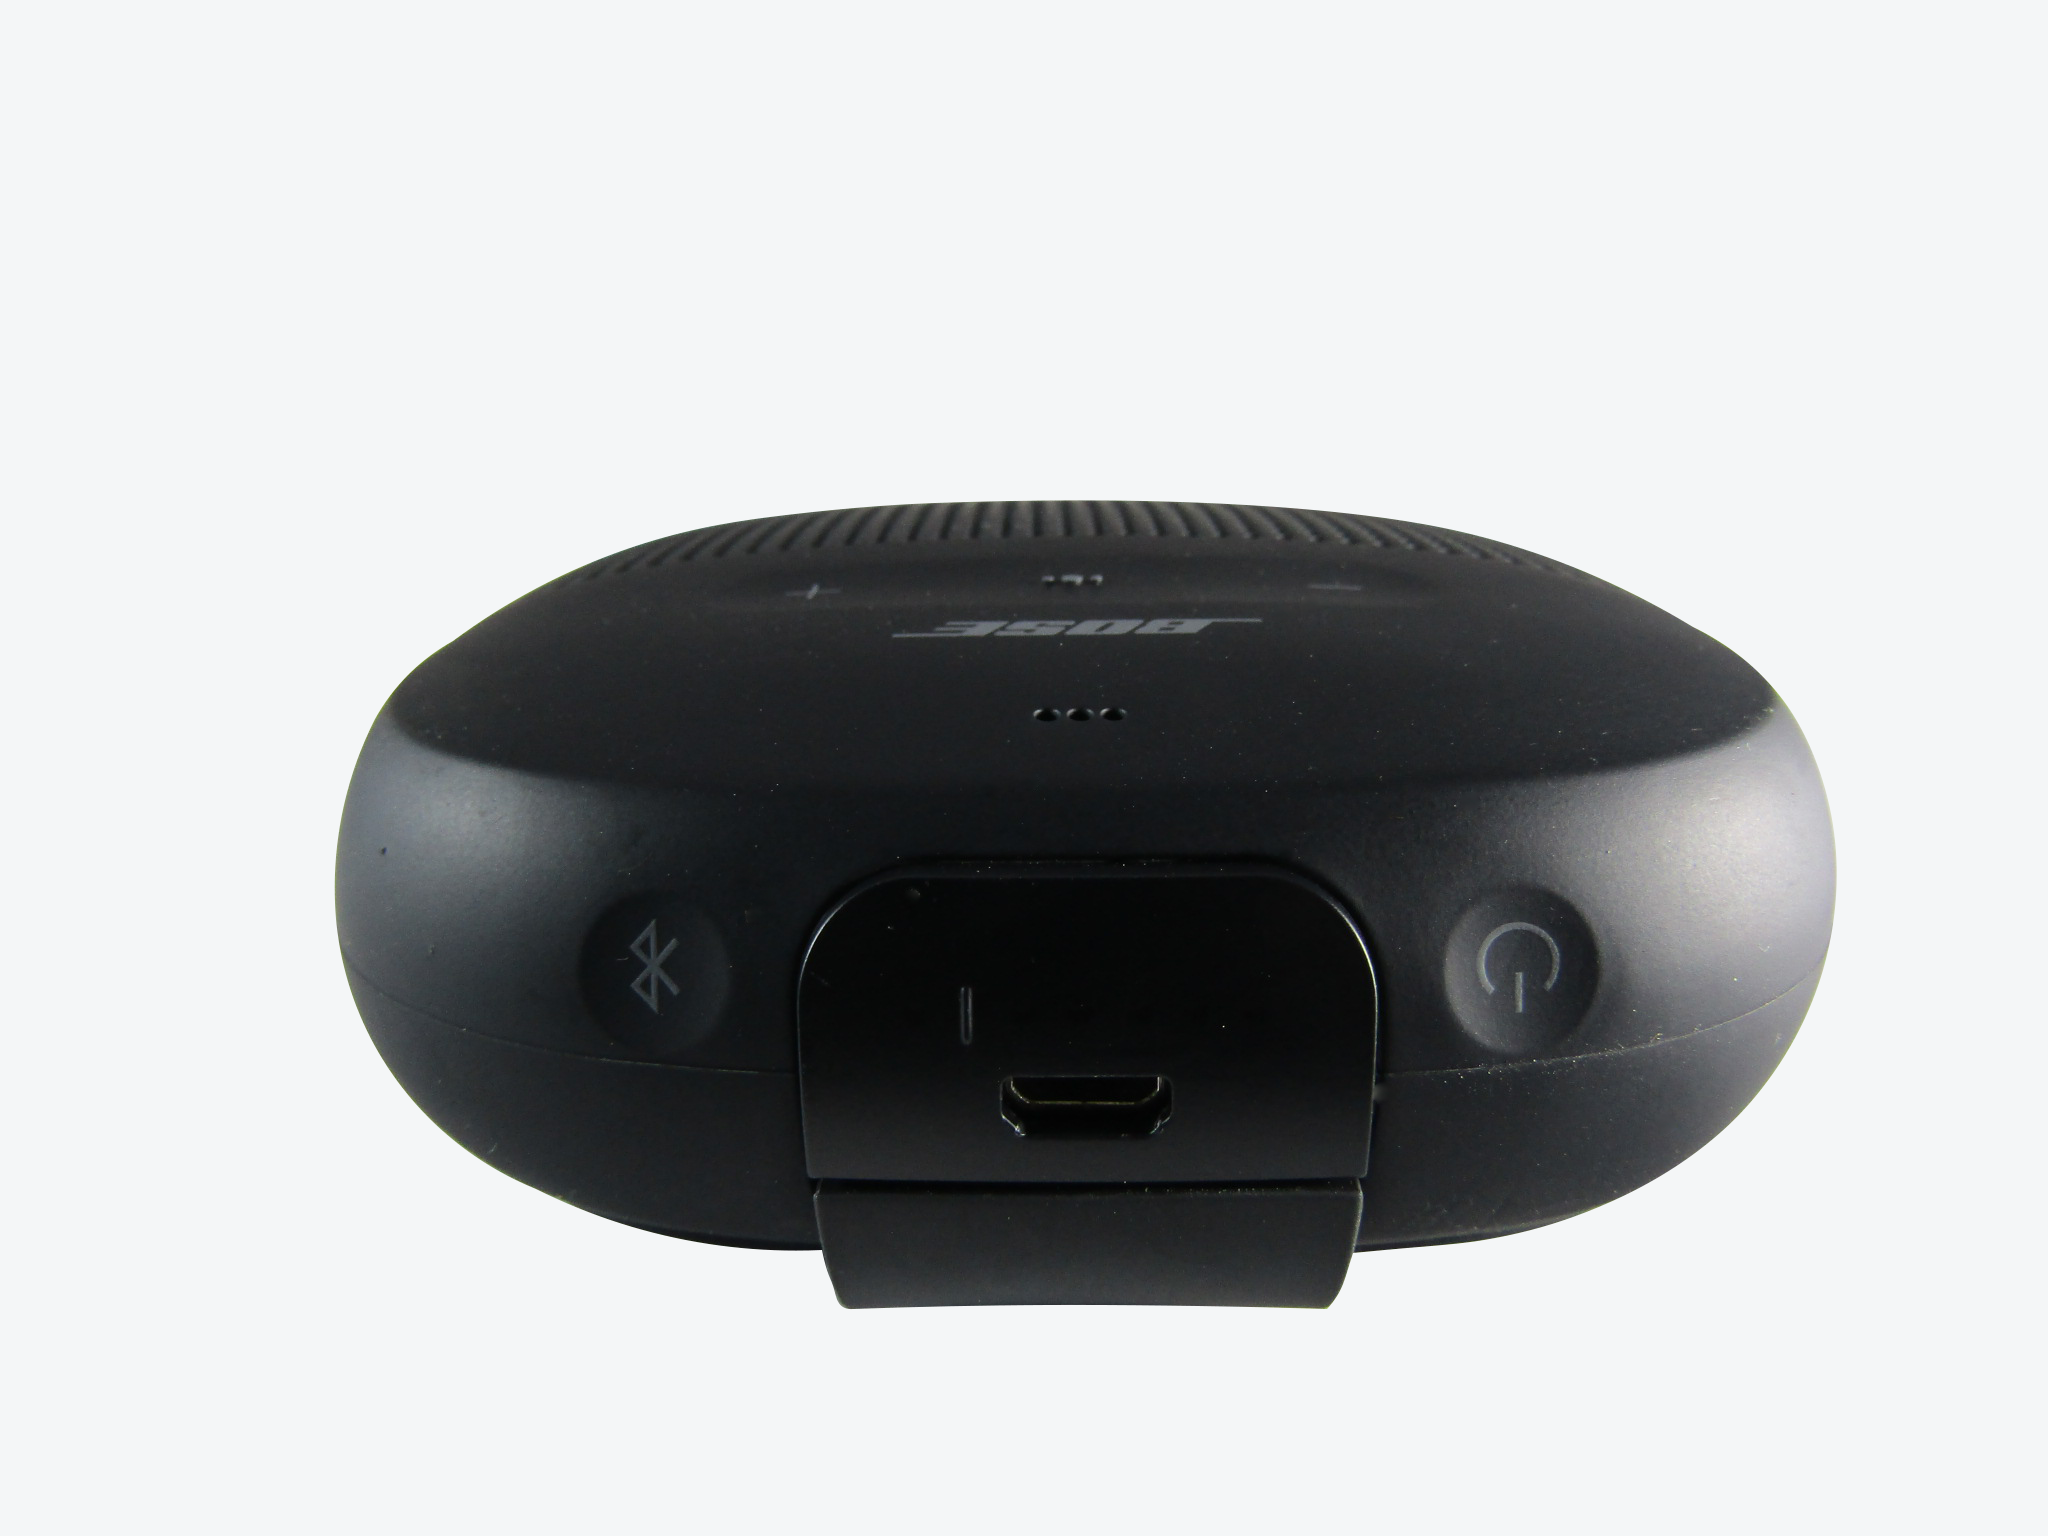 783342-0100 Bose SoundLink Micro: Small Portable Bluetooth Speaker